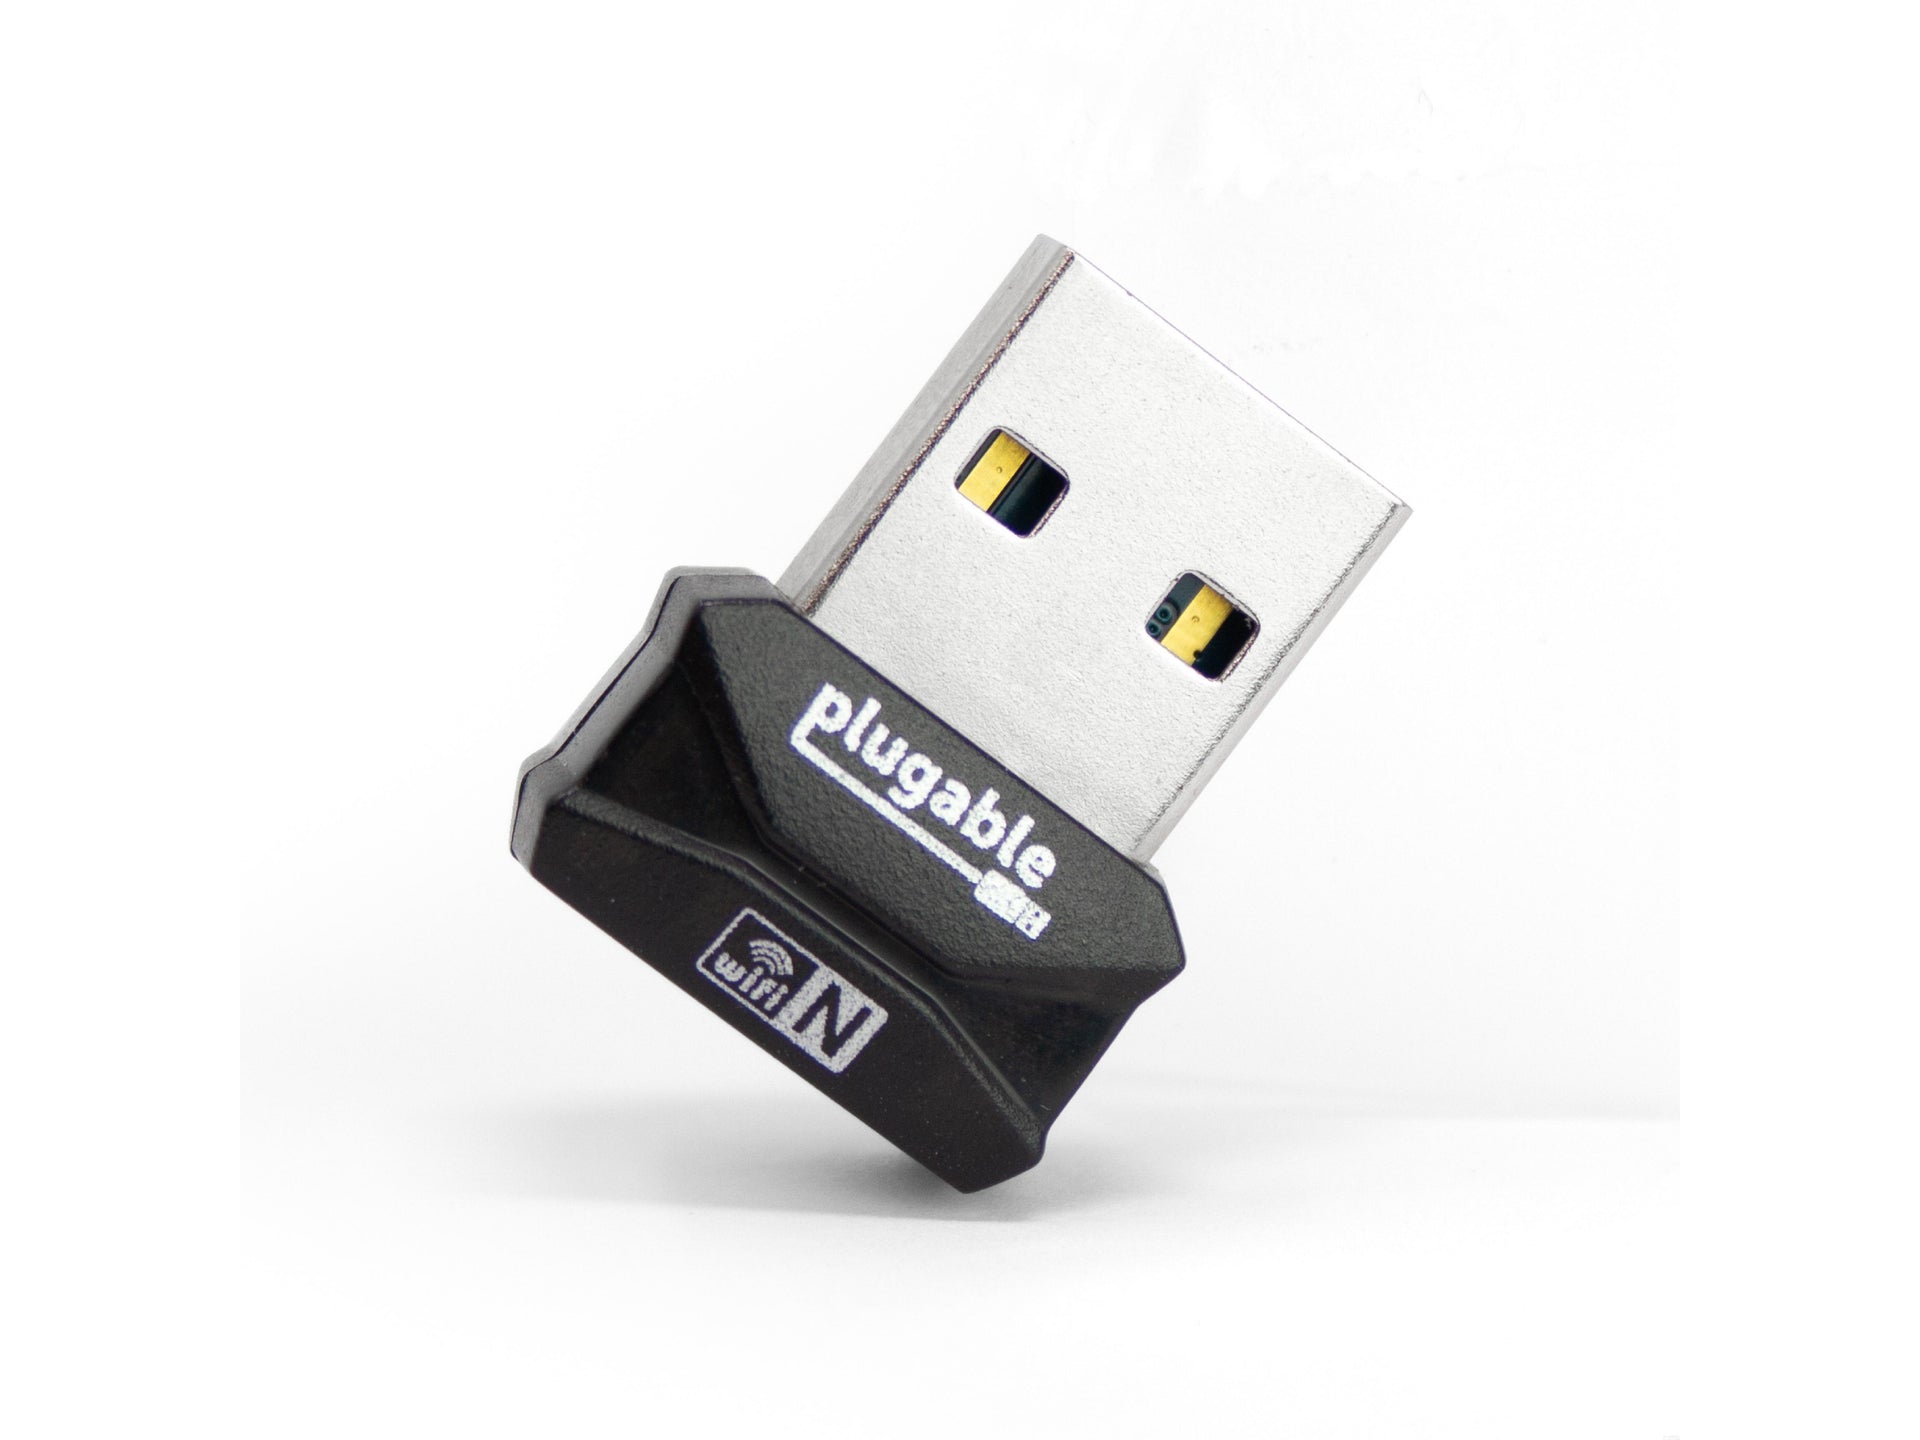 Plugable USB 2.0 802.11n Wireless Adapter – Plugable Technologies